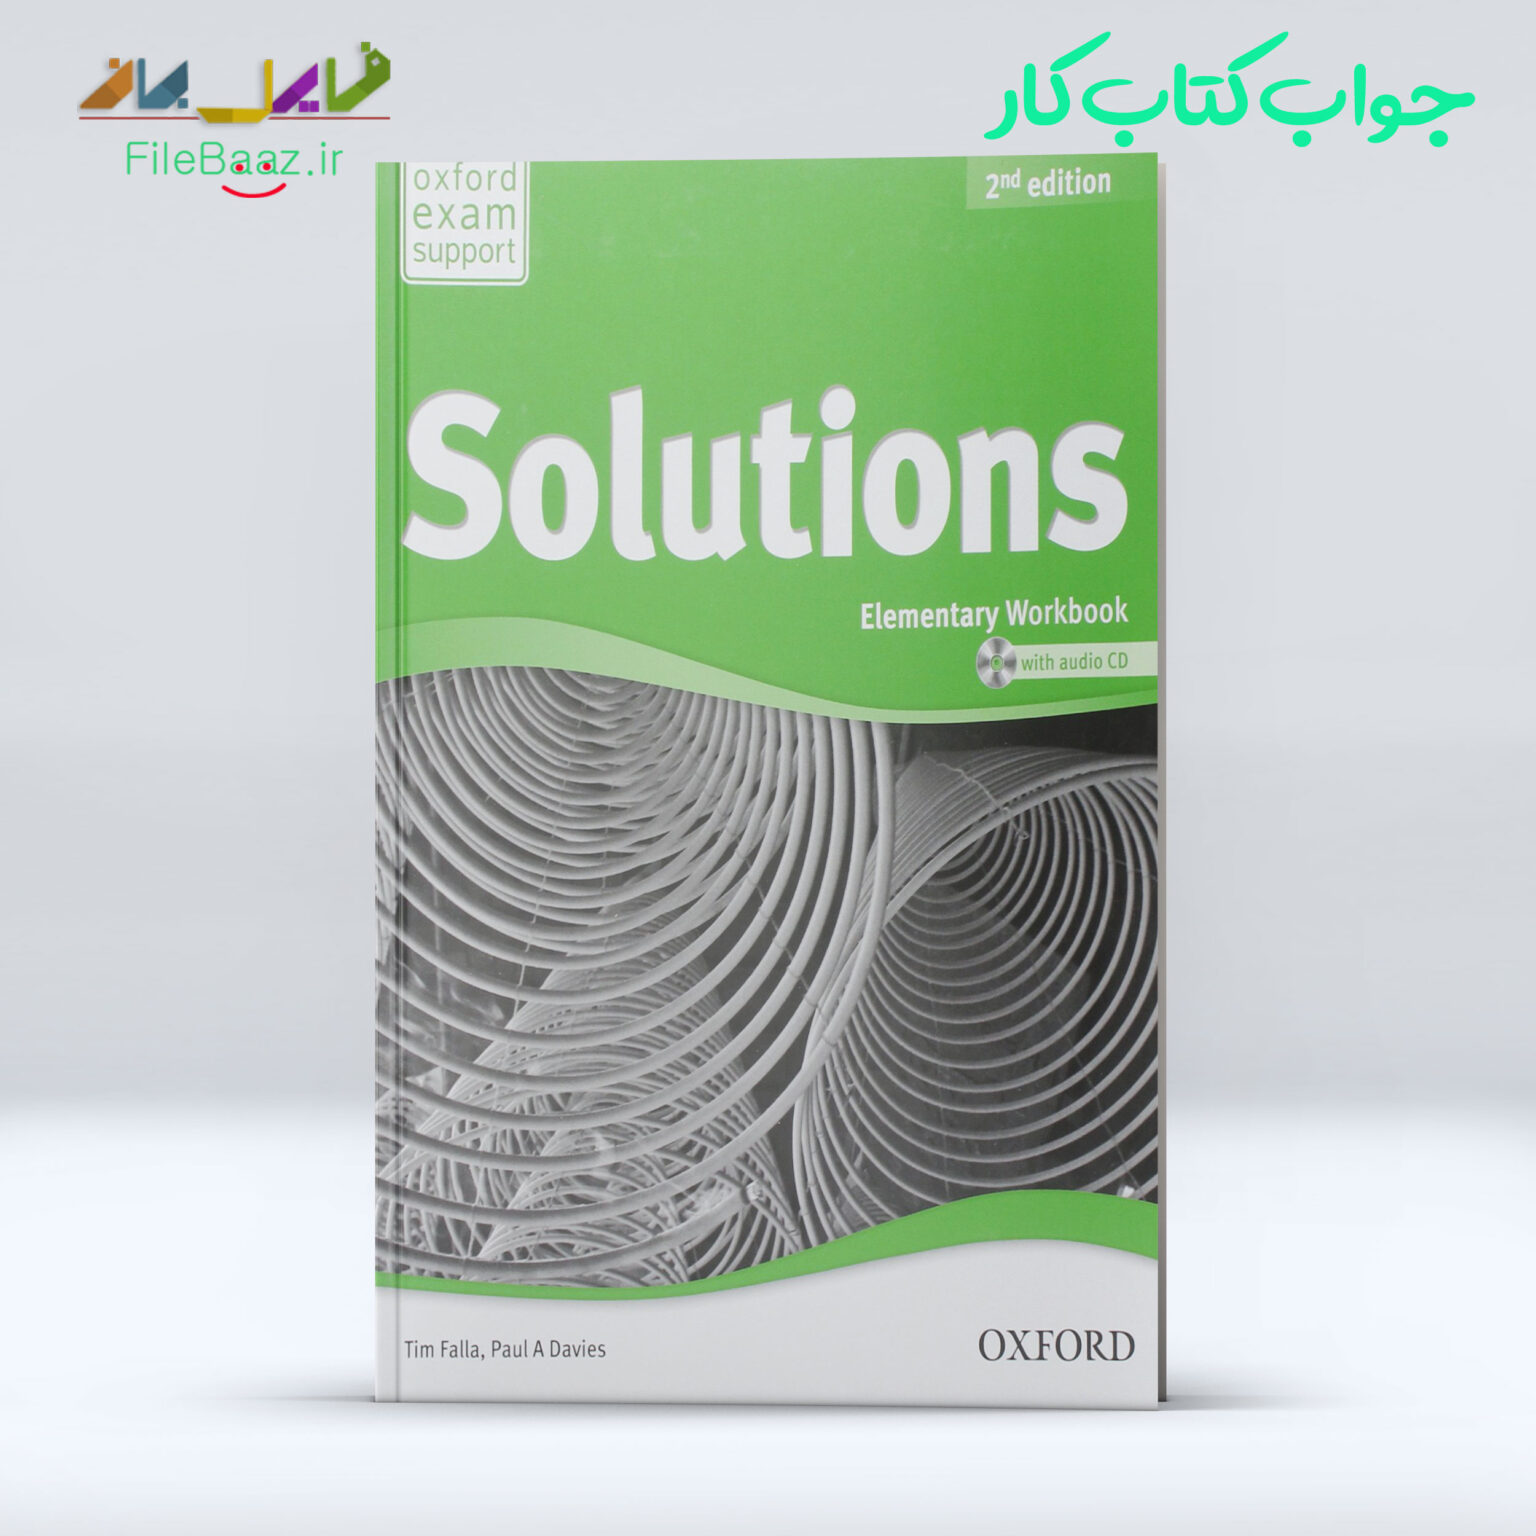 Third Edition solutions Elementary Workbook. Solutions Elementary Workbook third Edition р 34 гдз. Solutions elementary workbook 5 класс